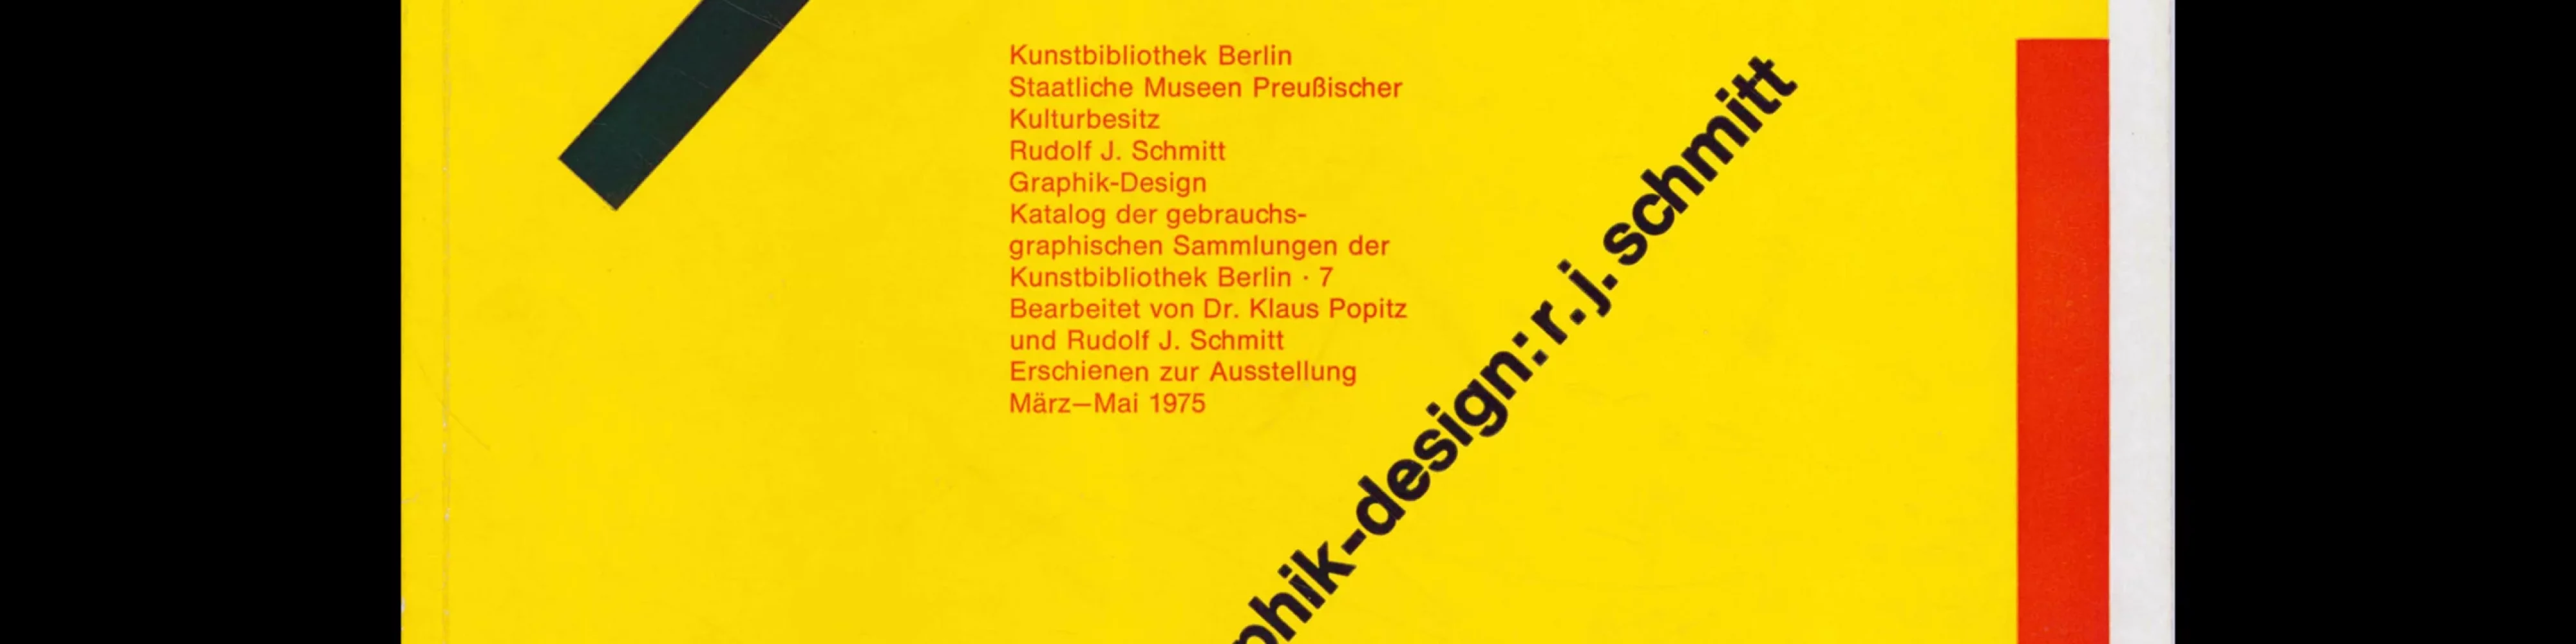 Graphik-Design : R. J. Schmitt, Kunstbibliothek, 1975